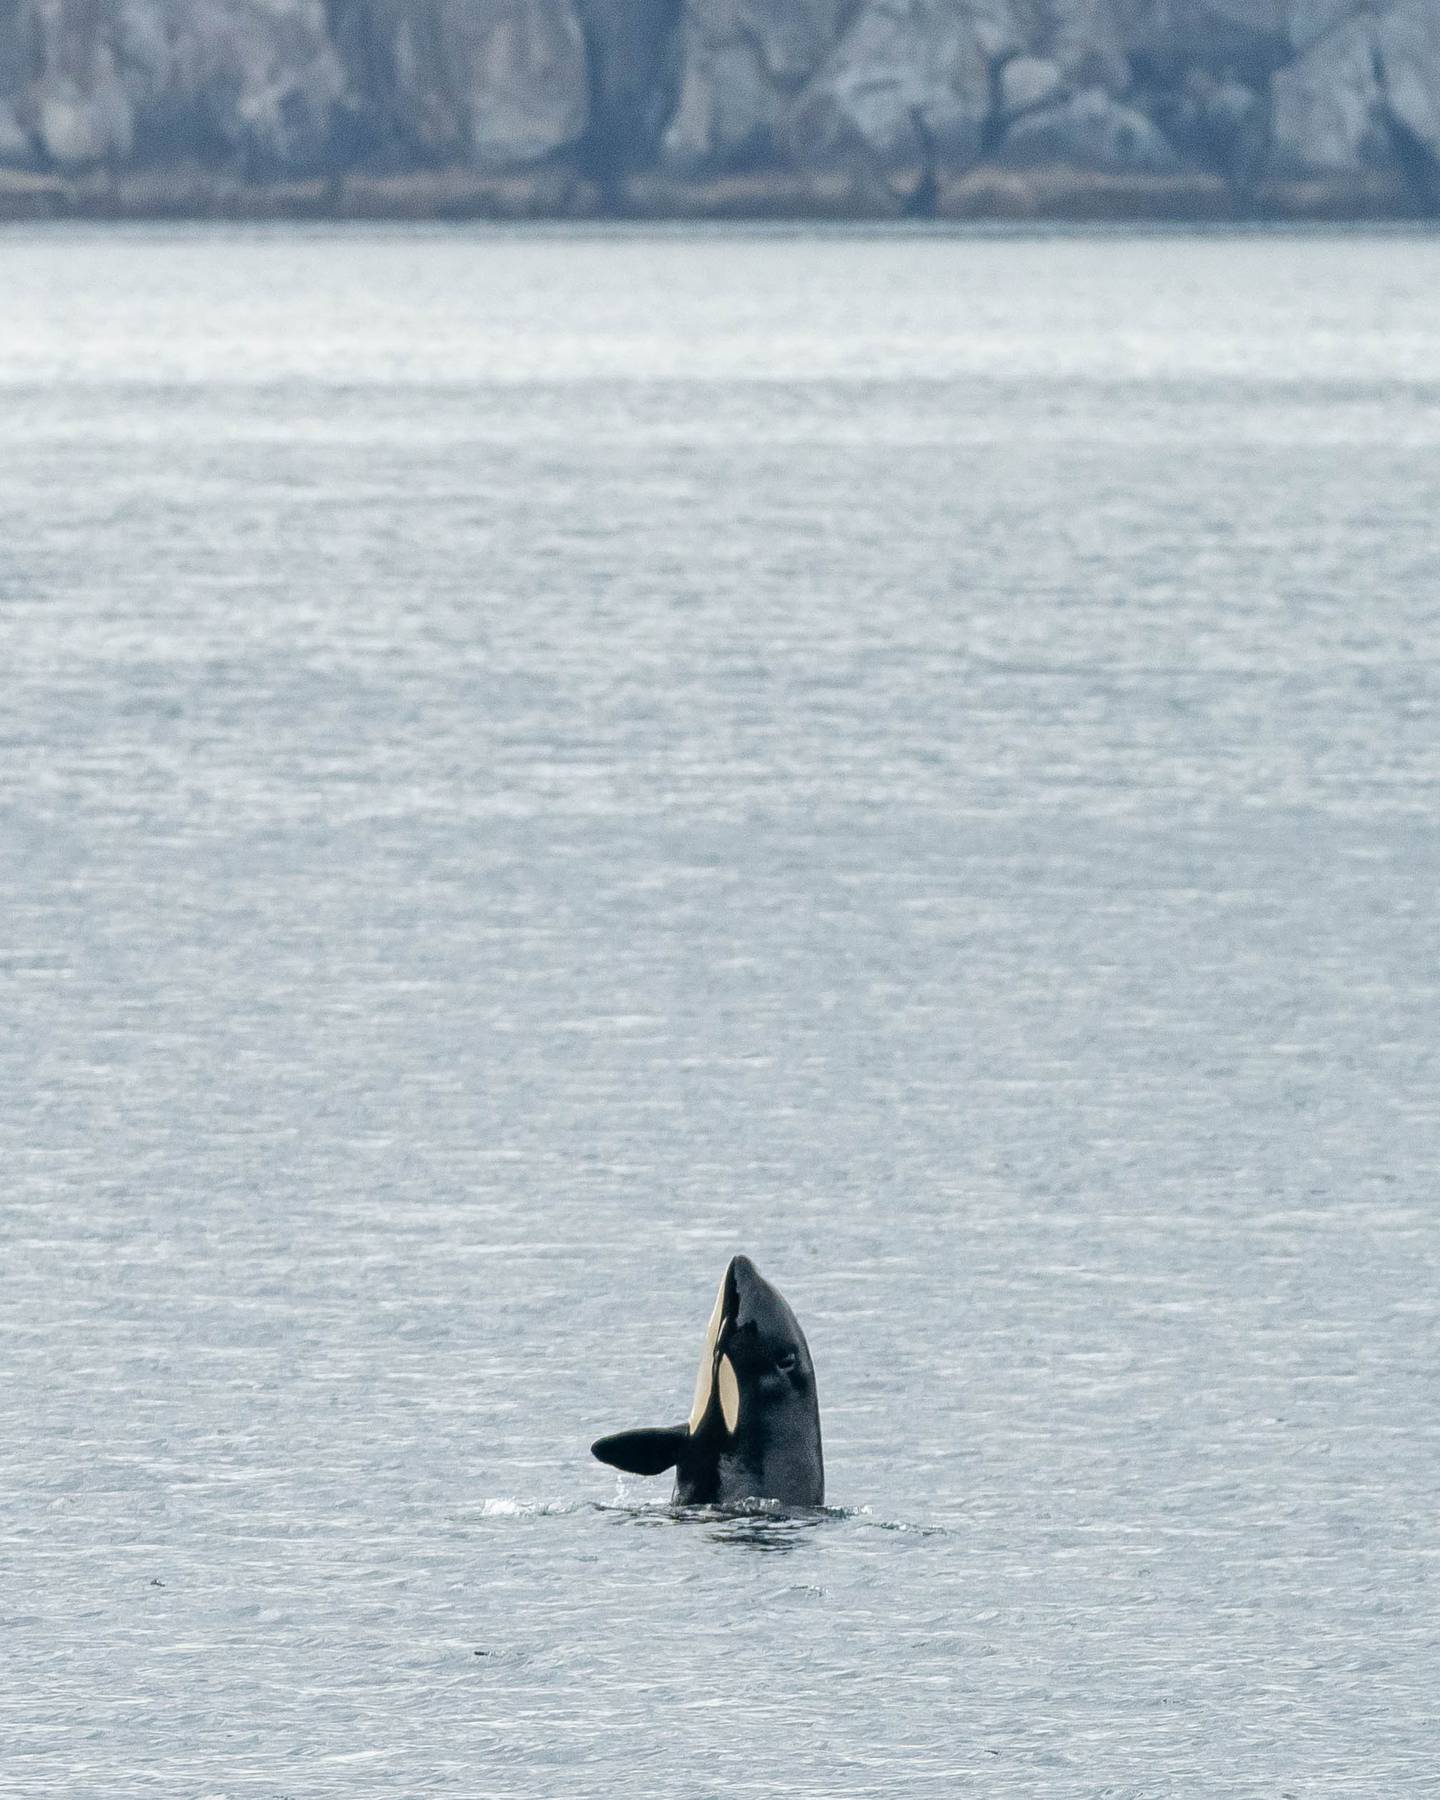 Kenai Fjords National Park, Resurrection Bay, killer whale, orca, orca whale, spyhop, spyhopping